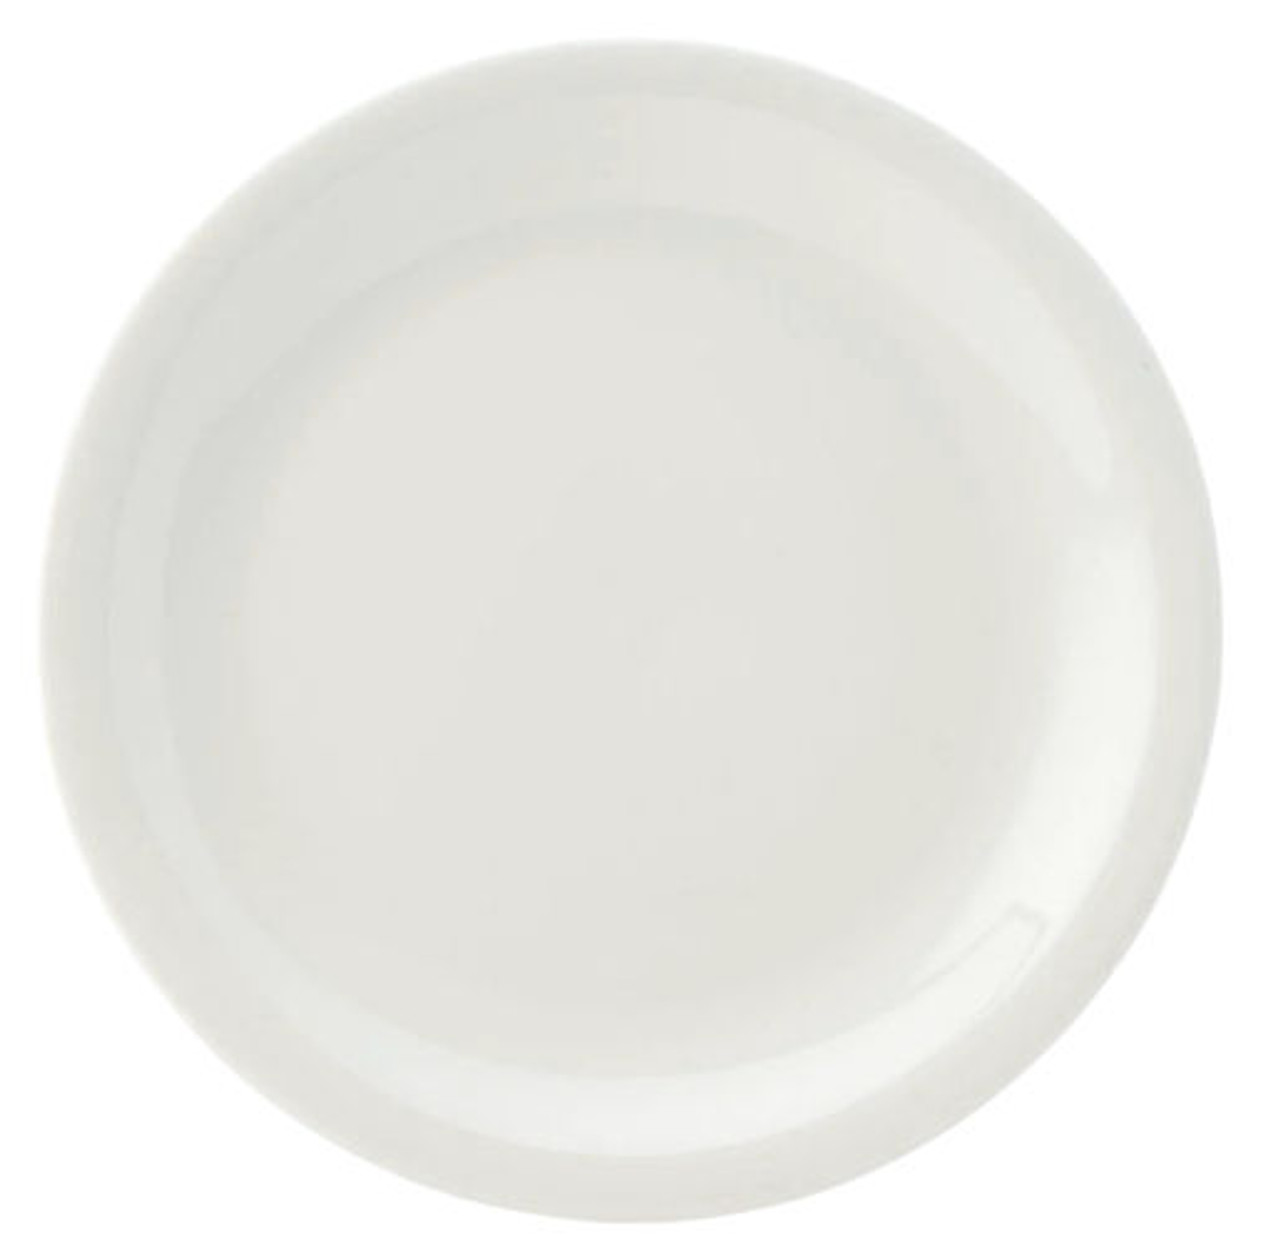 Utopia Titan Narrow Rimmed Plates White 240mm Ea: Clearance Price